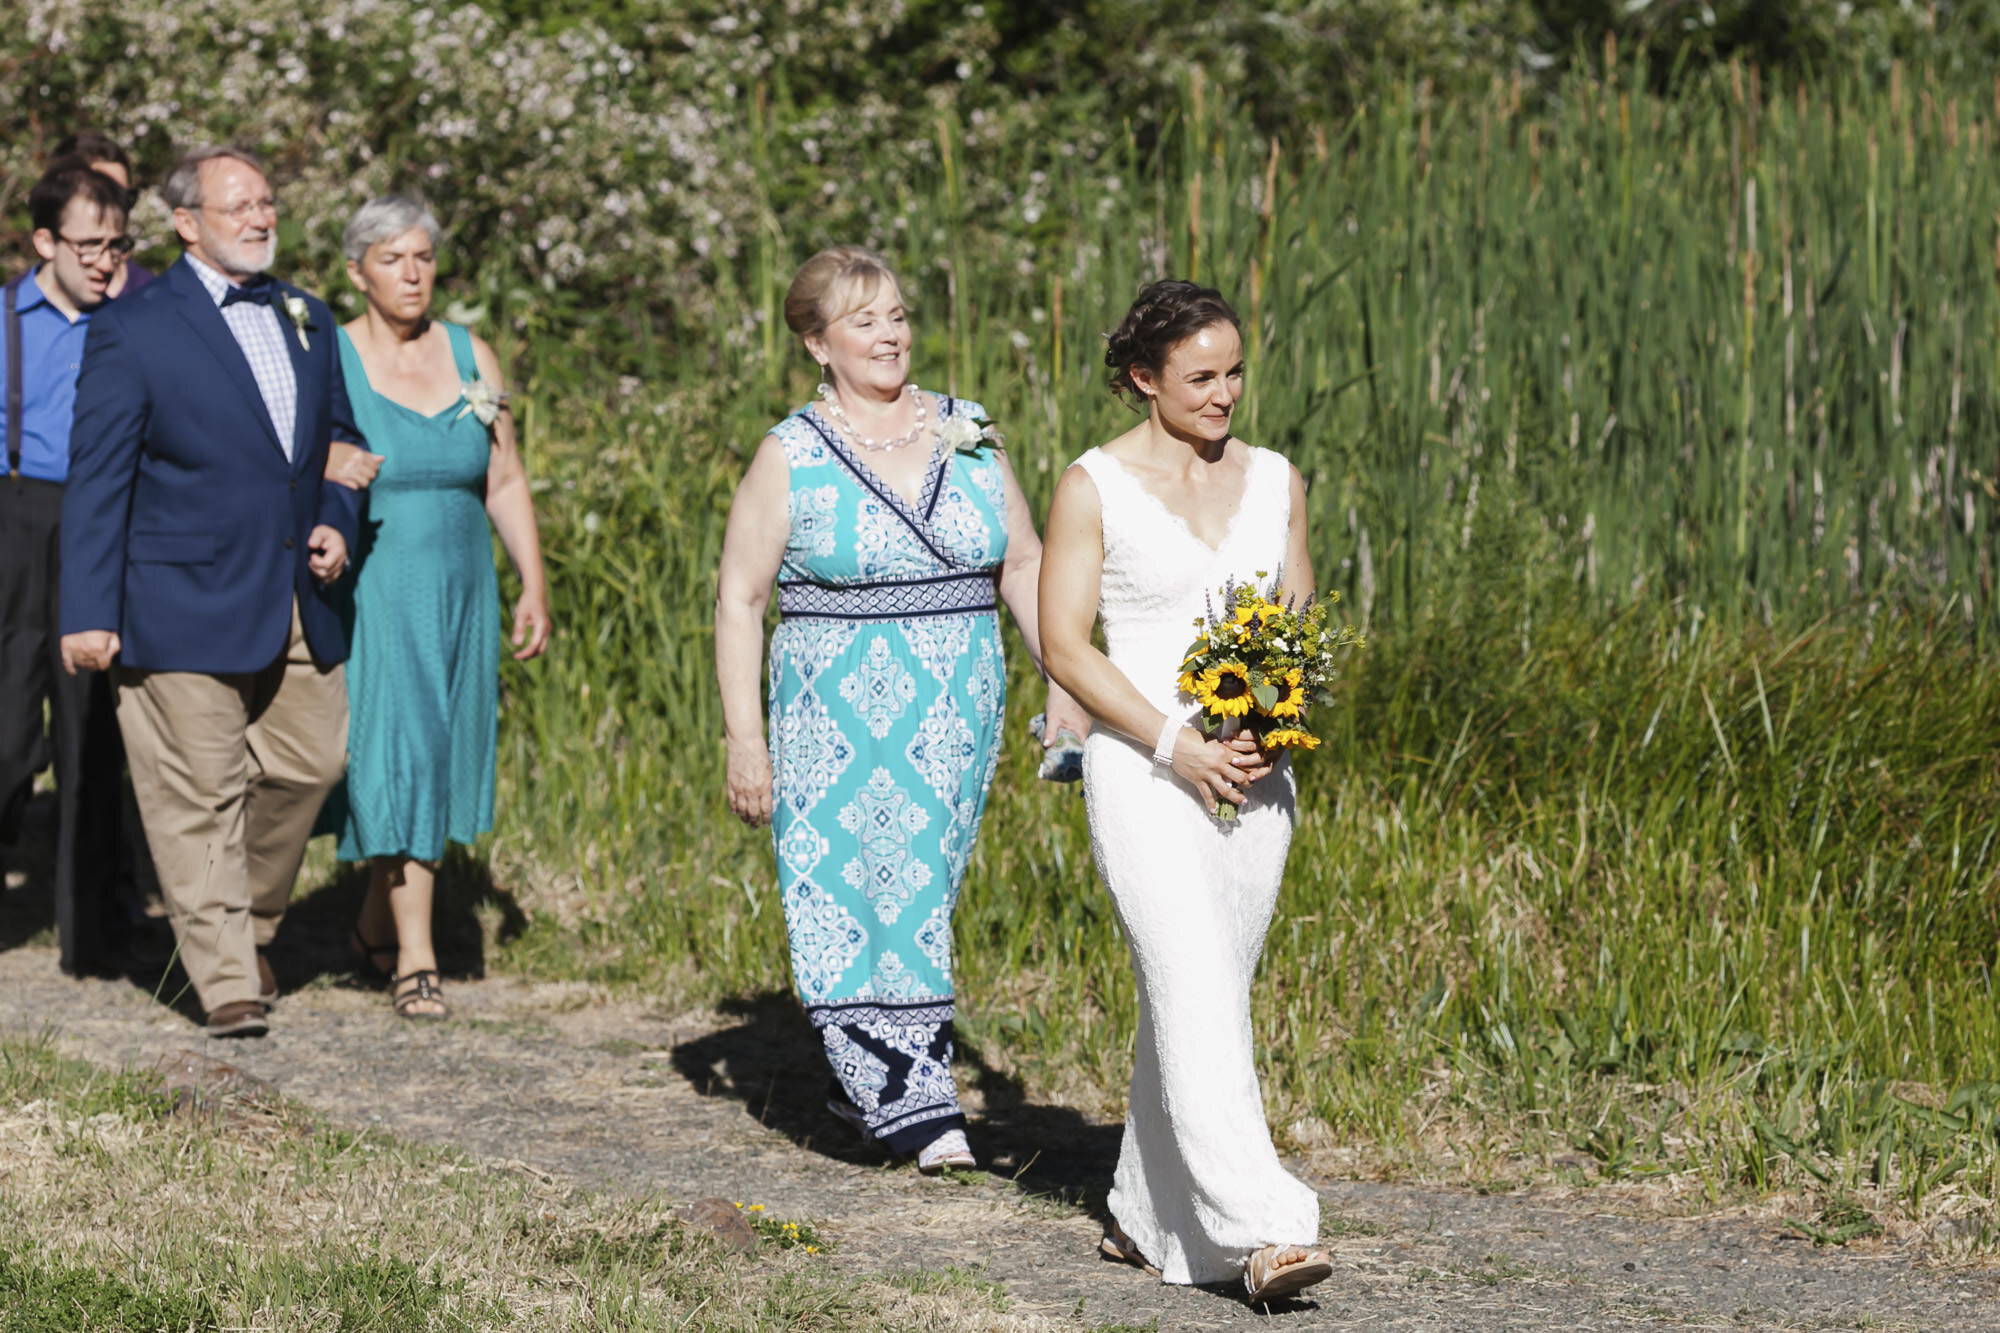 Bride leads guests into wedding ceremony in backyard Sonoma California